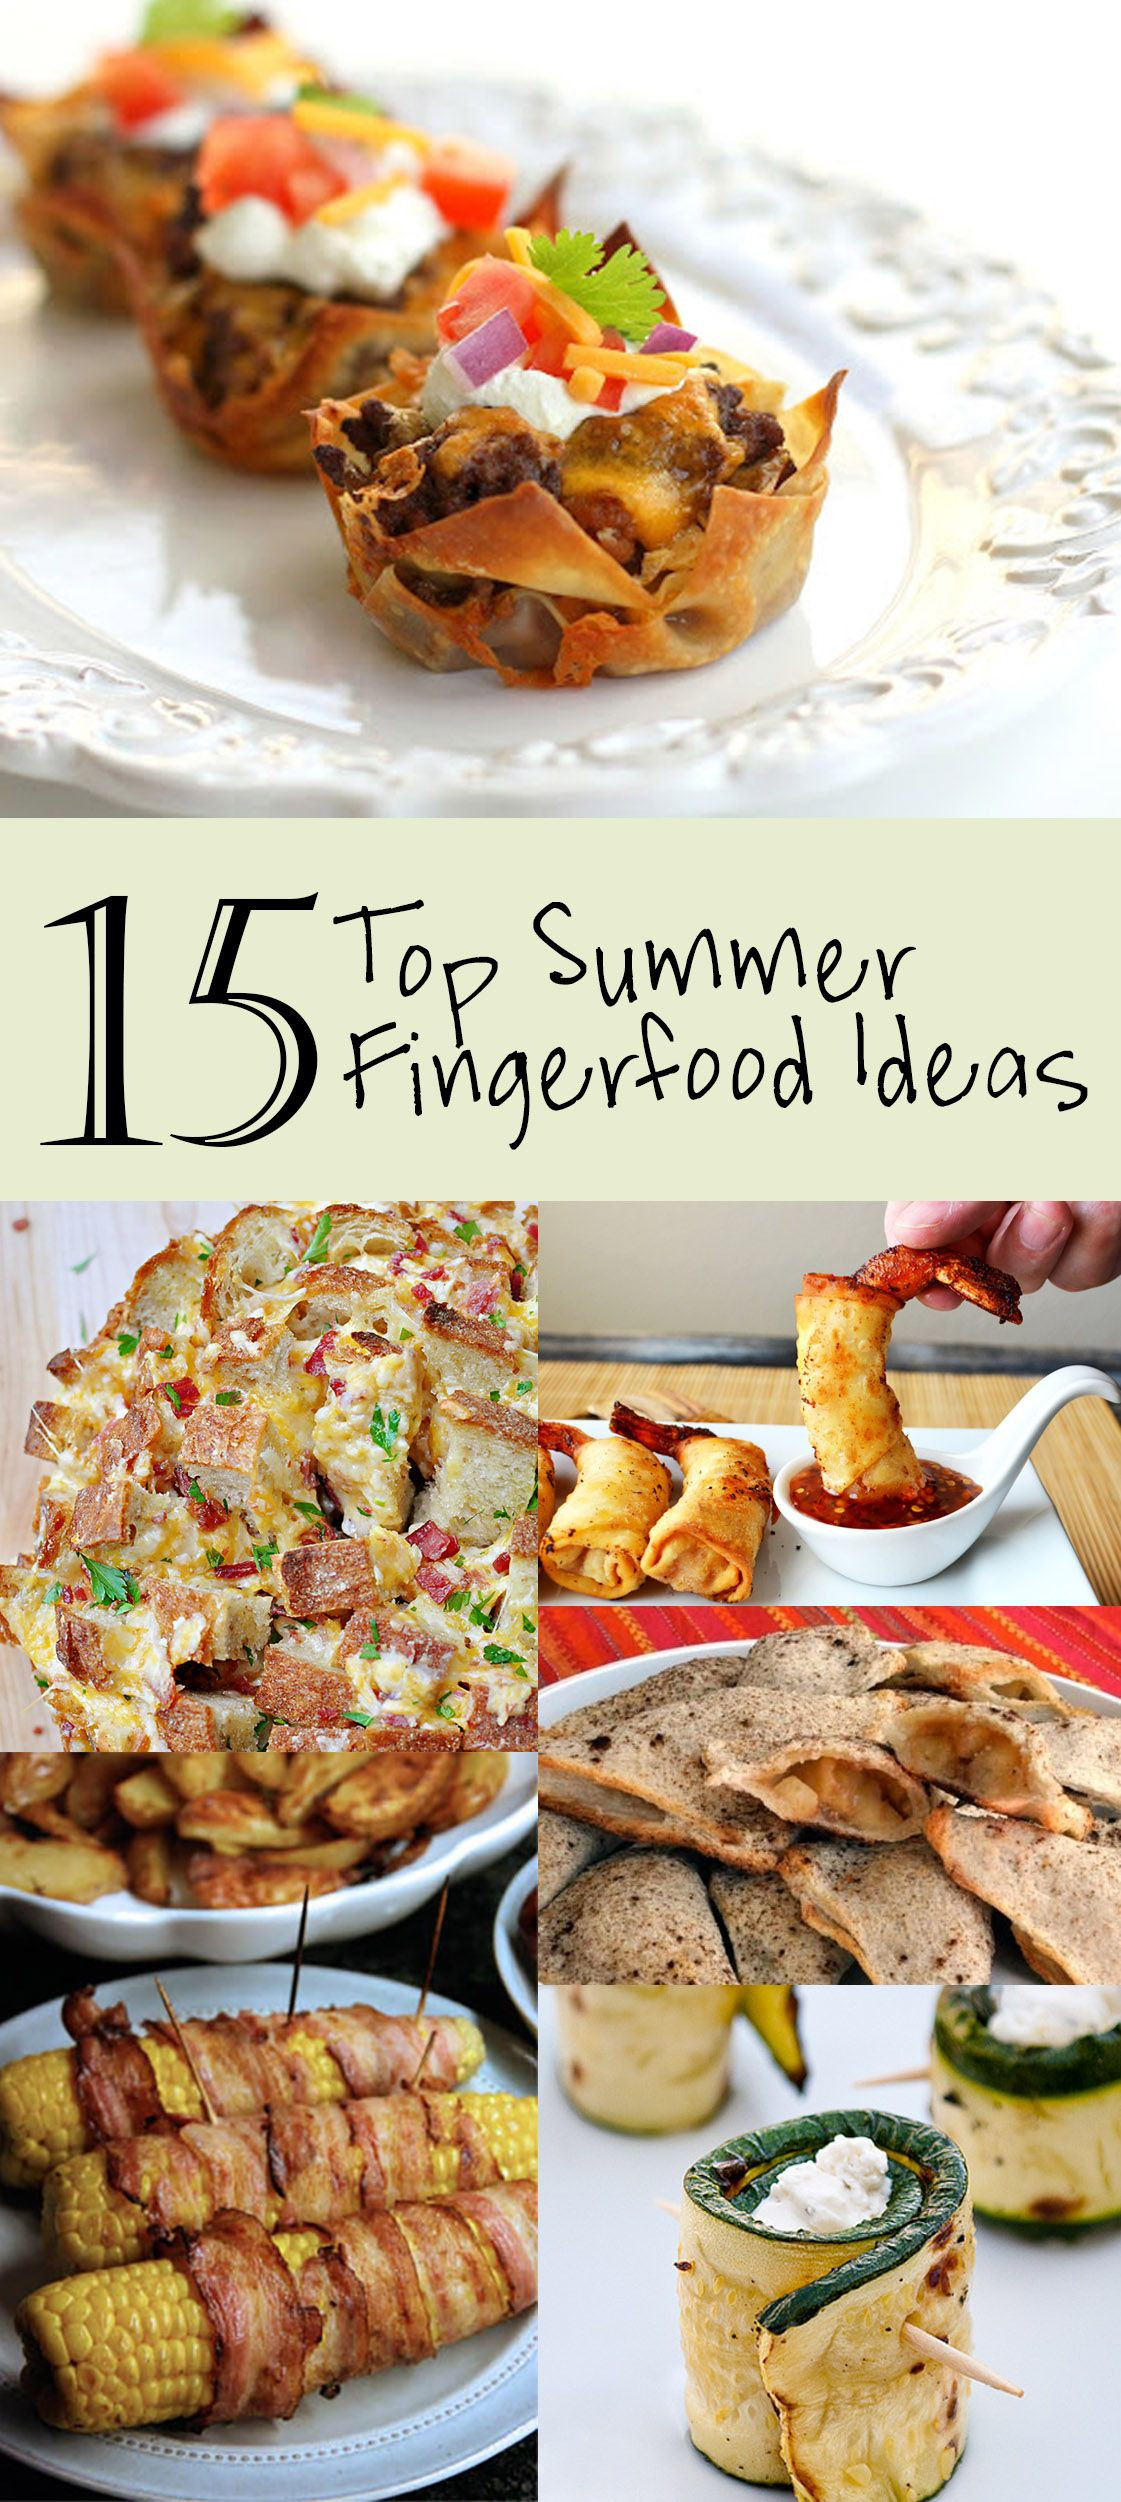 Summer Party Finger Food Ideas
 Top 15 Summer Finger Food ideas